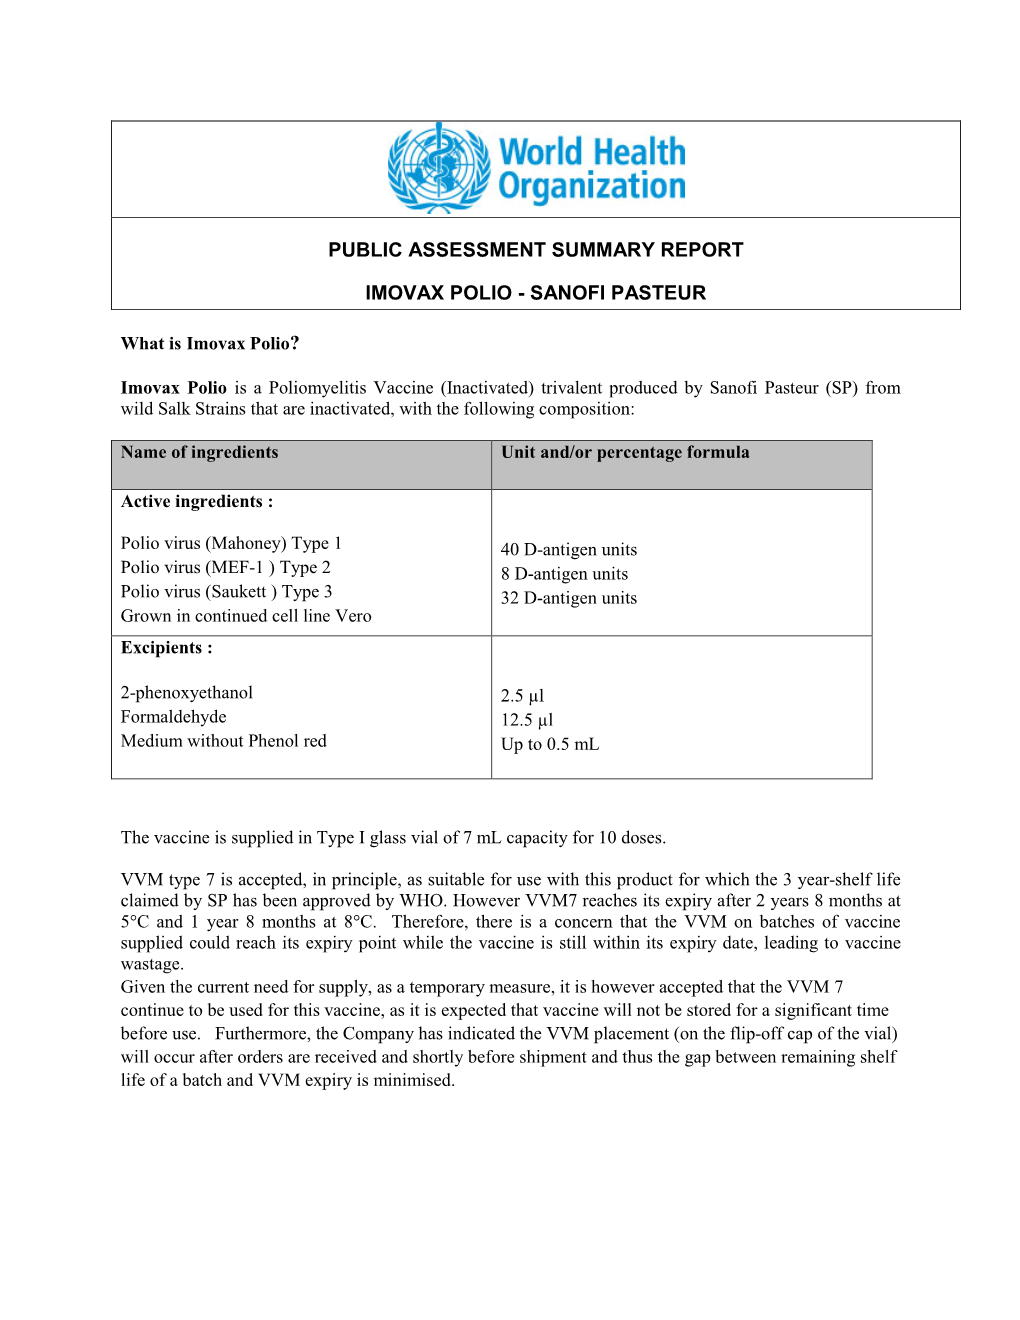 Public Assessment Summary Report Imovax Polio